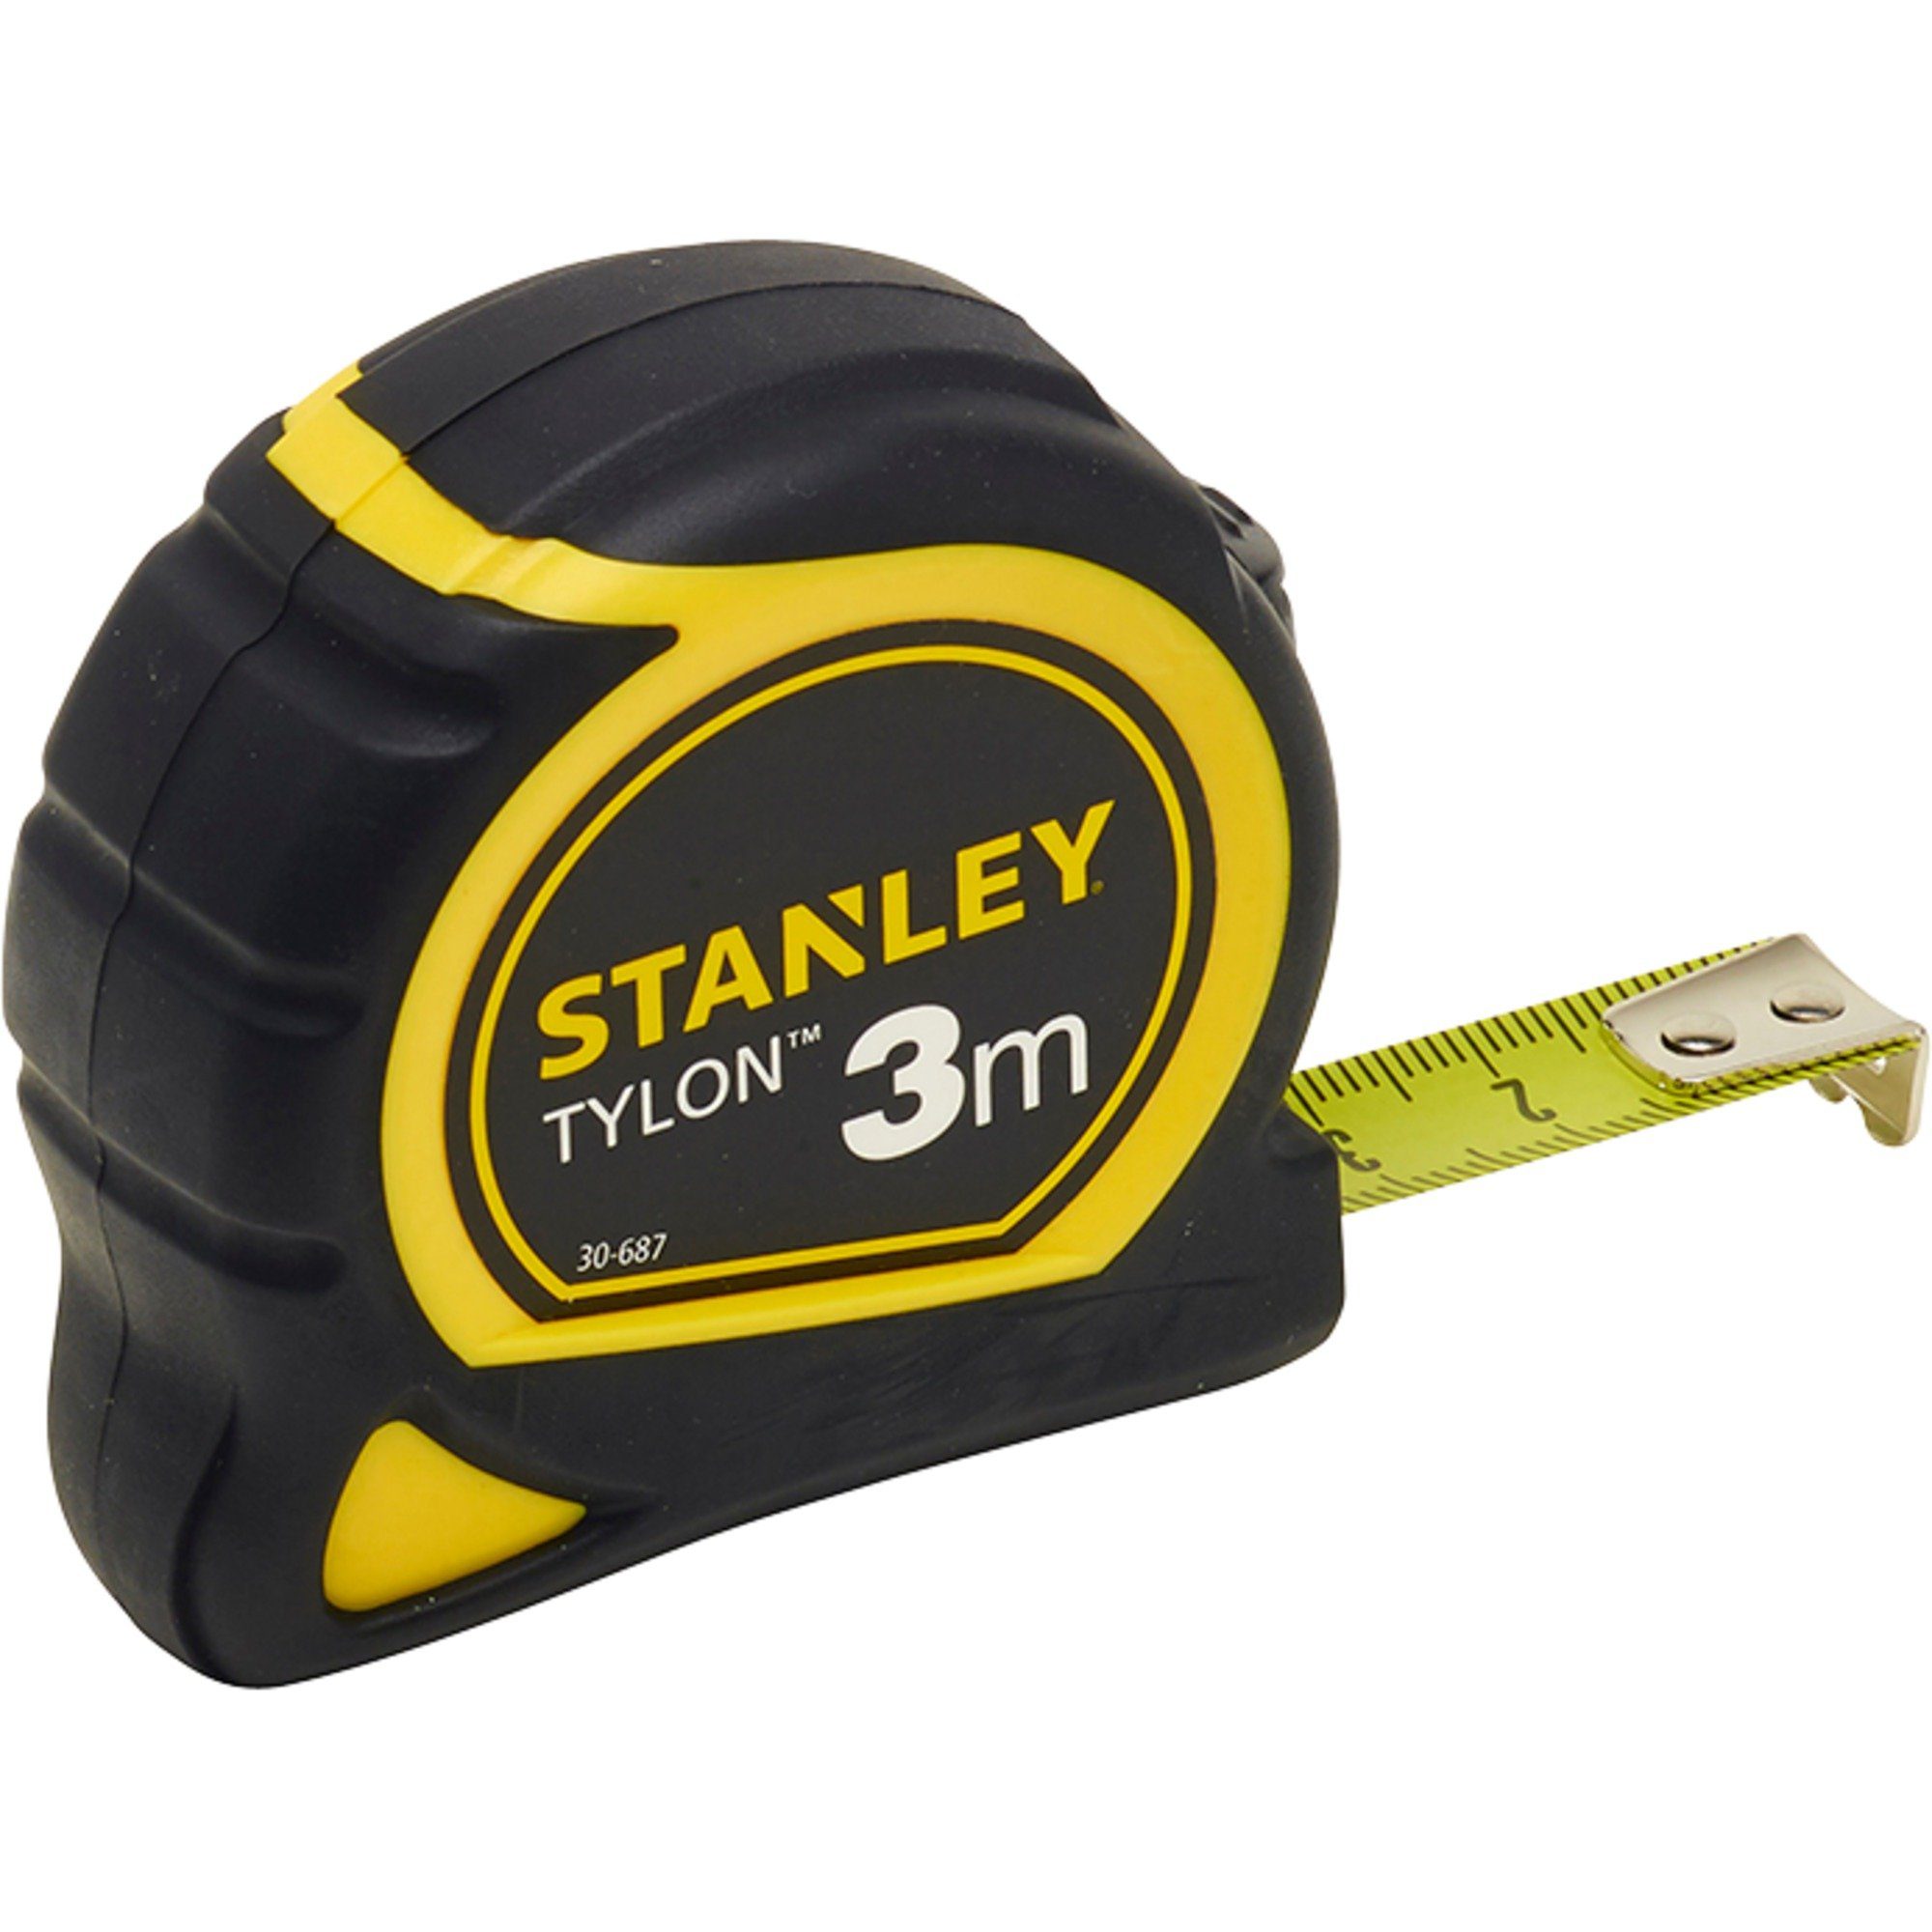 STANLEY Maßband Stanley 3 Meter, Tylon, (12,7mm) Bandmaß